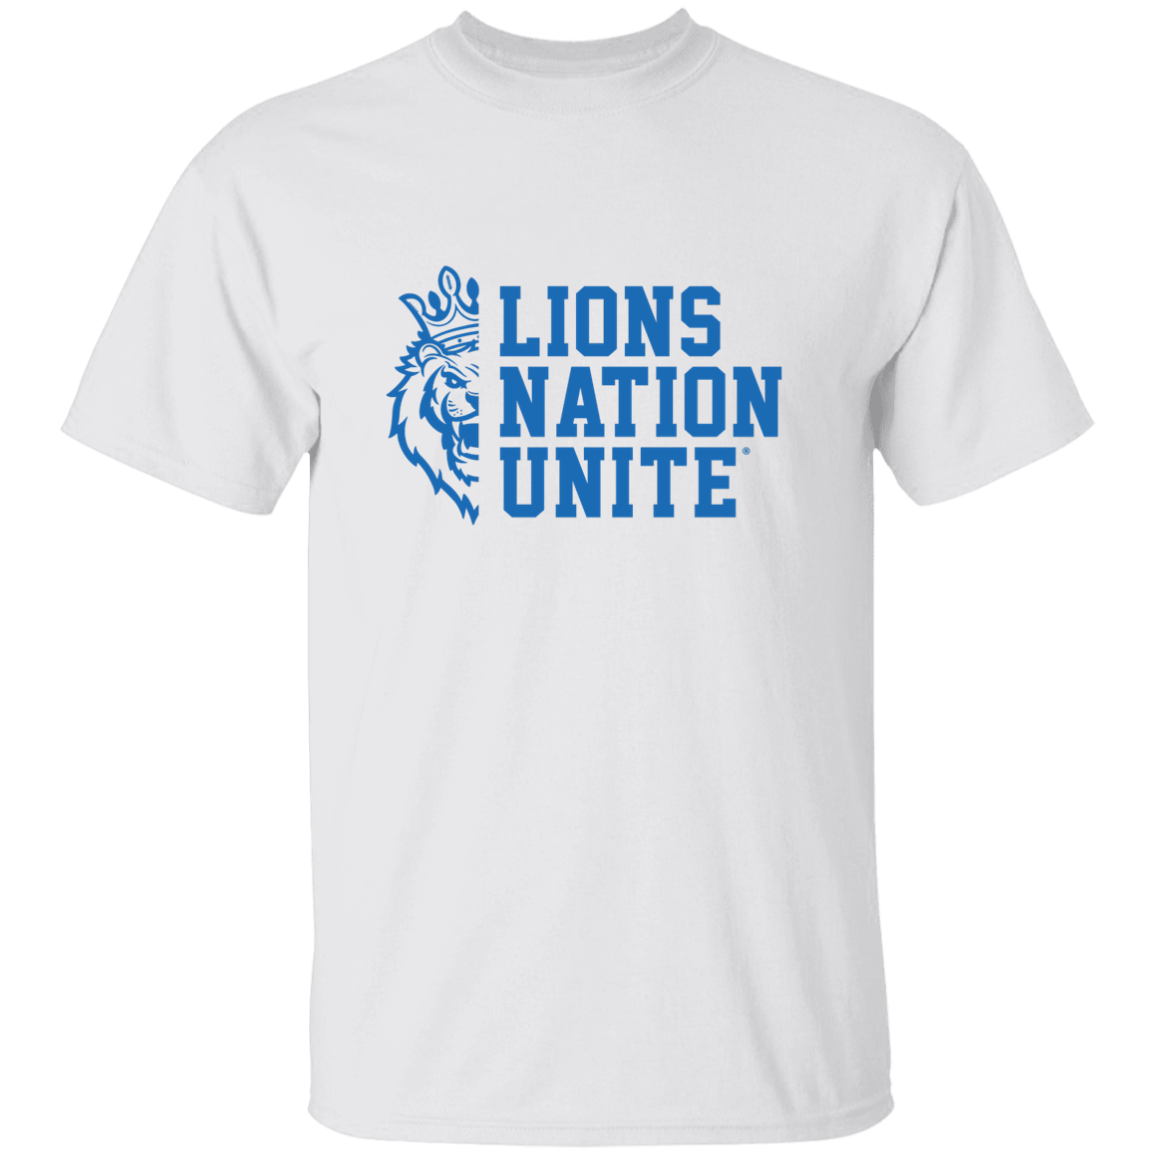 Lions Nation Unite - G500B Youth 5.3 oz 100% Cotton T-Shirt